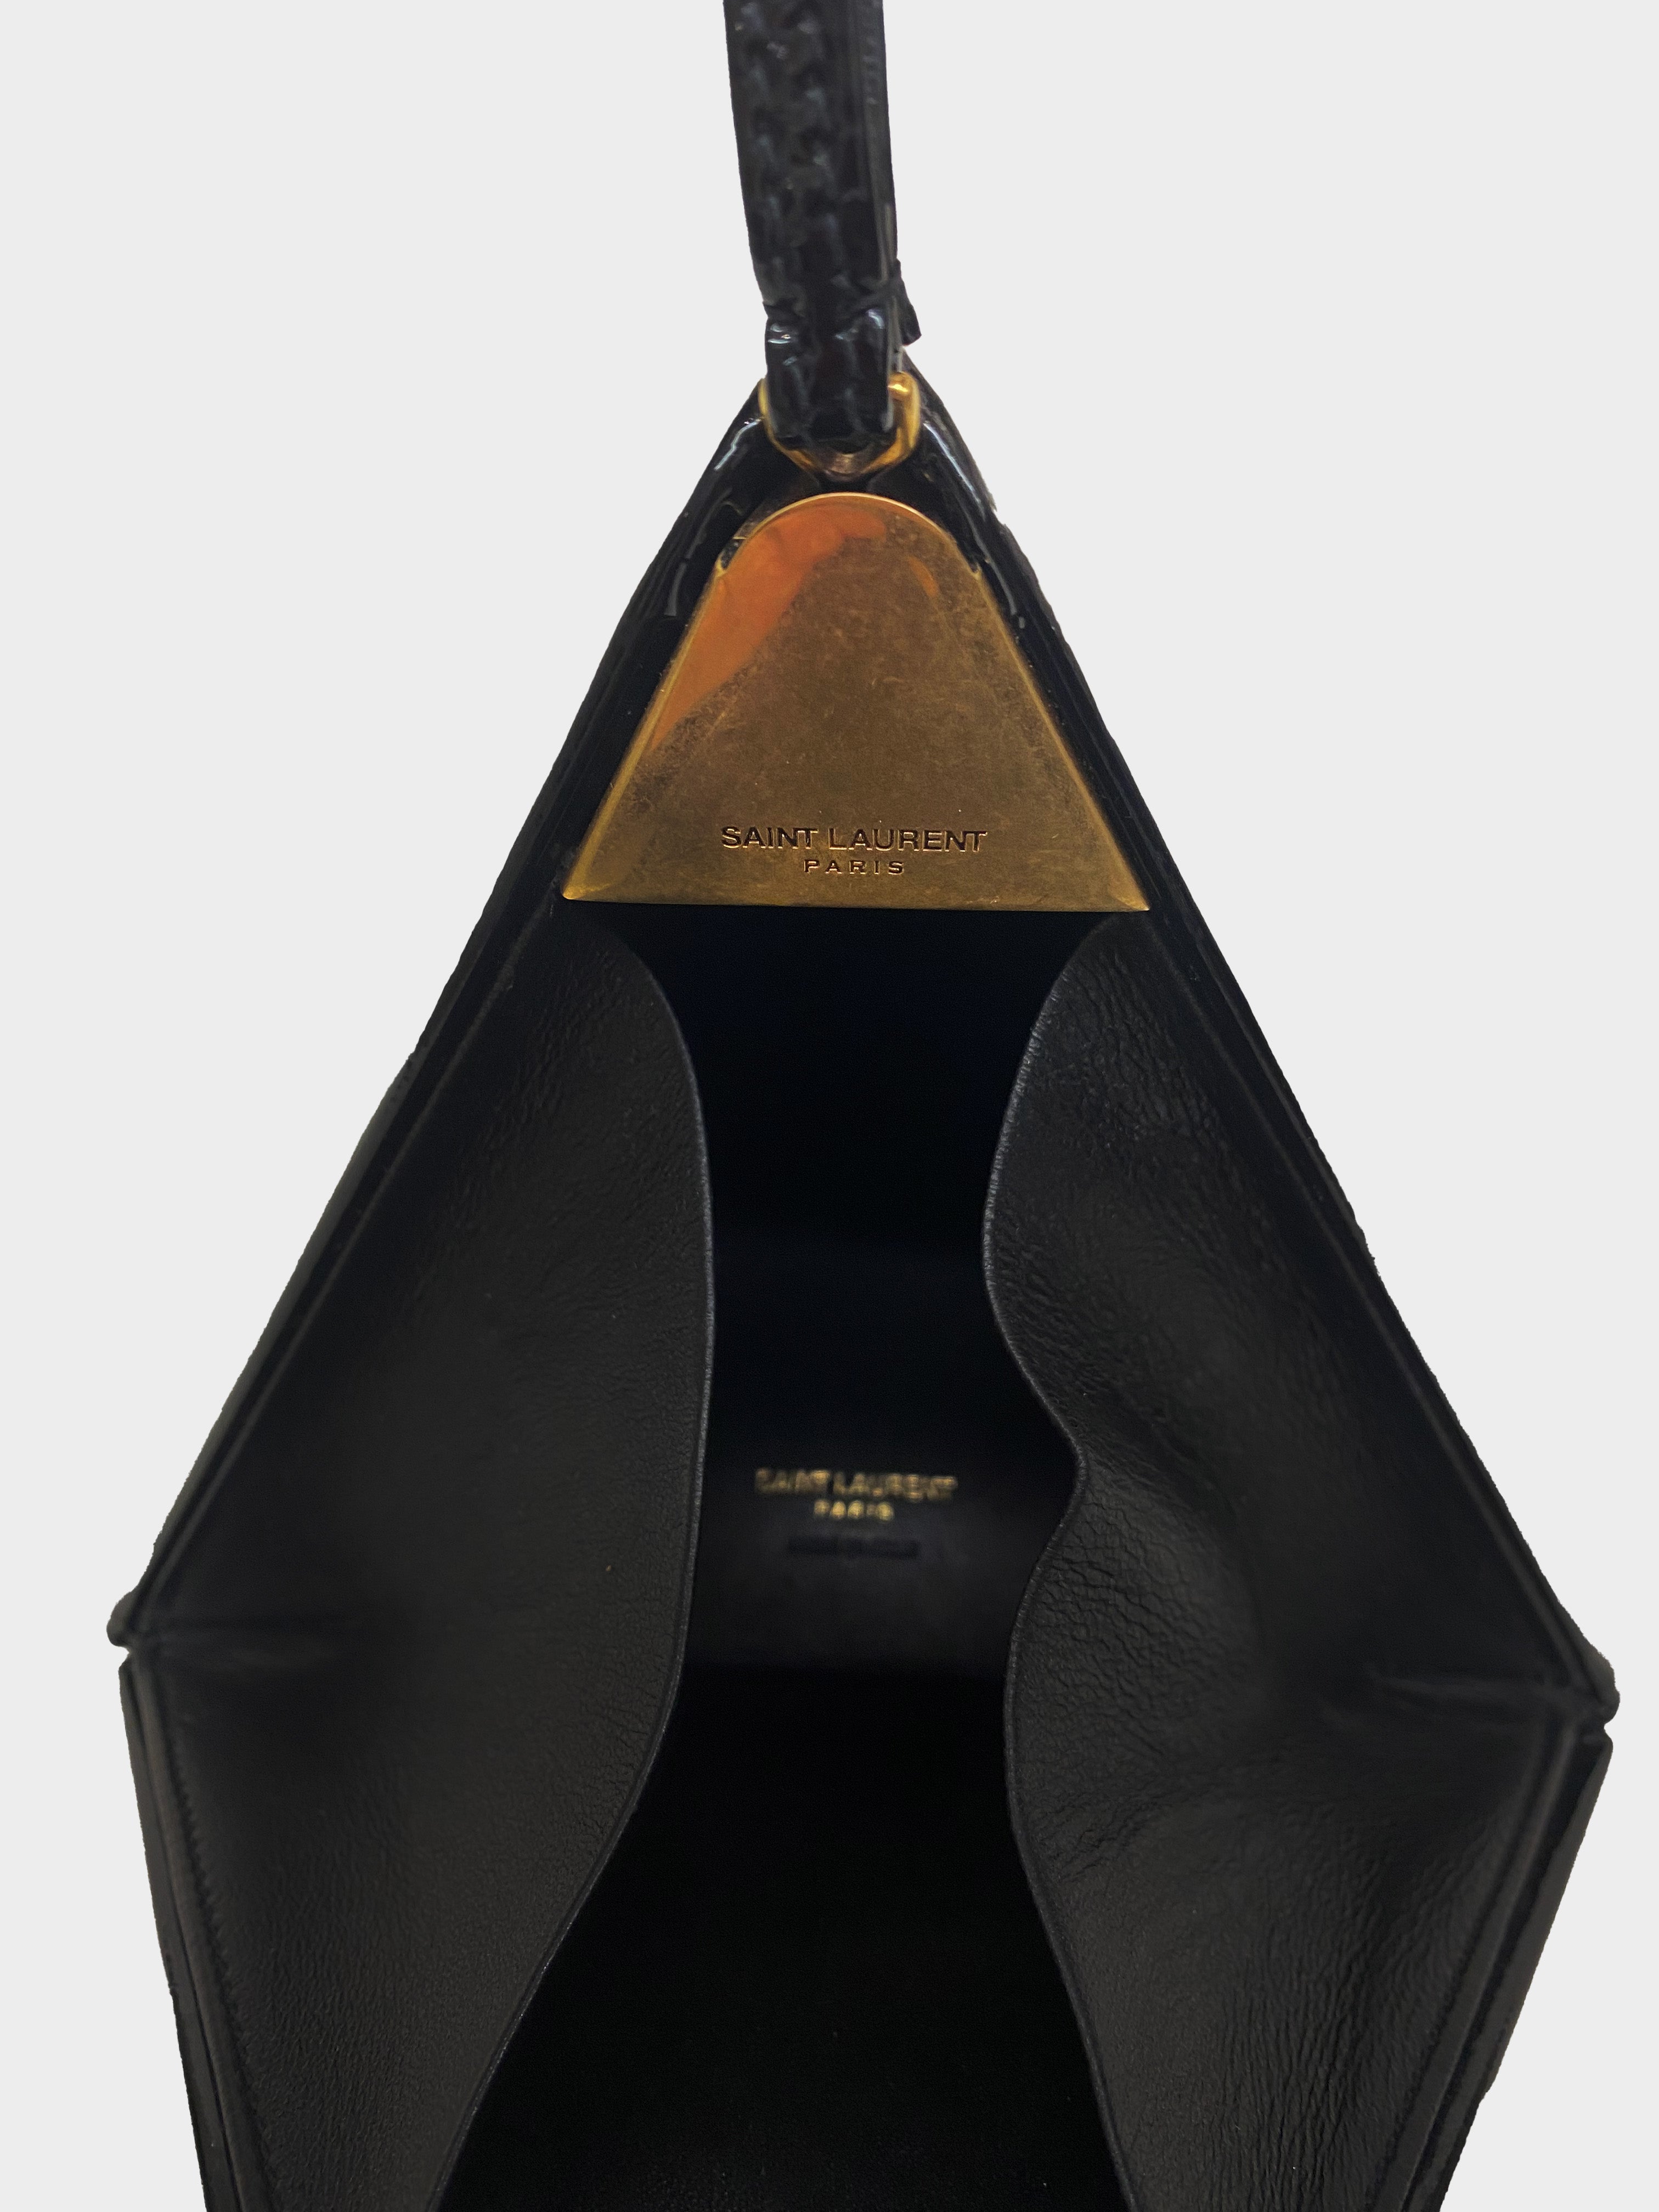 Saint Laurent Fall 2018 Patent Leather Pyramid Bag